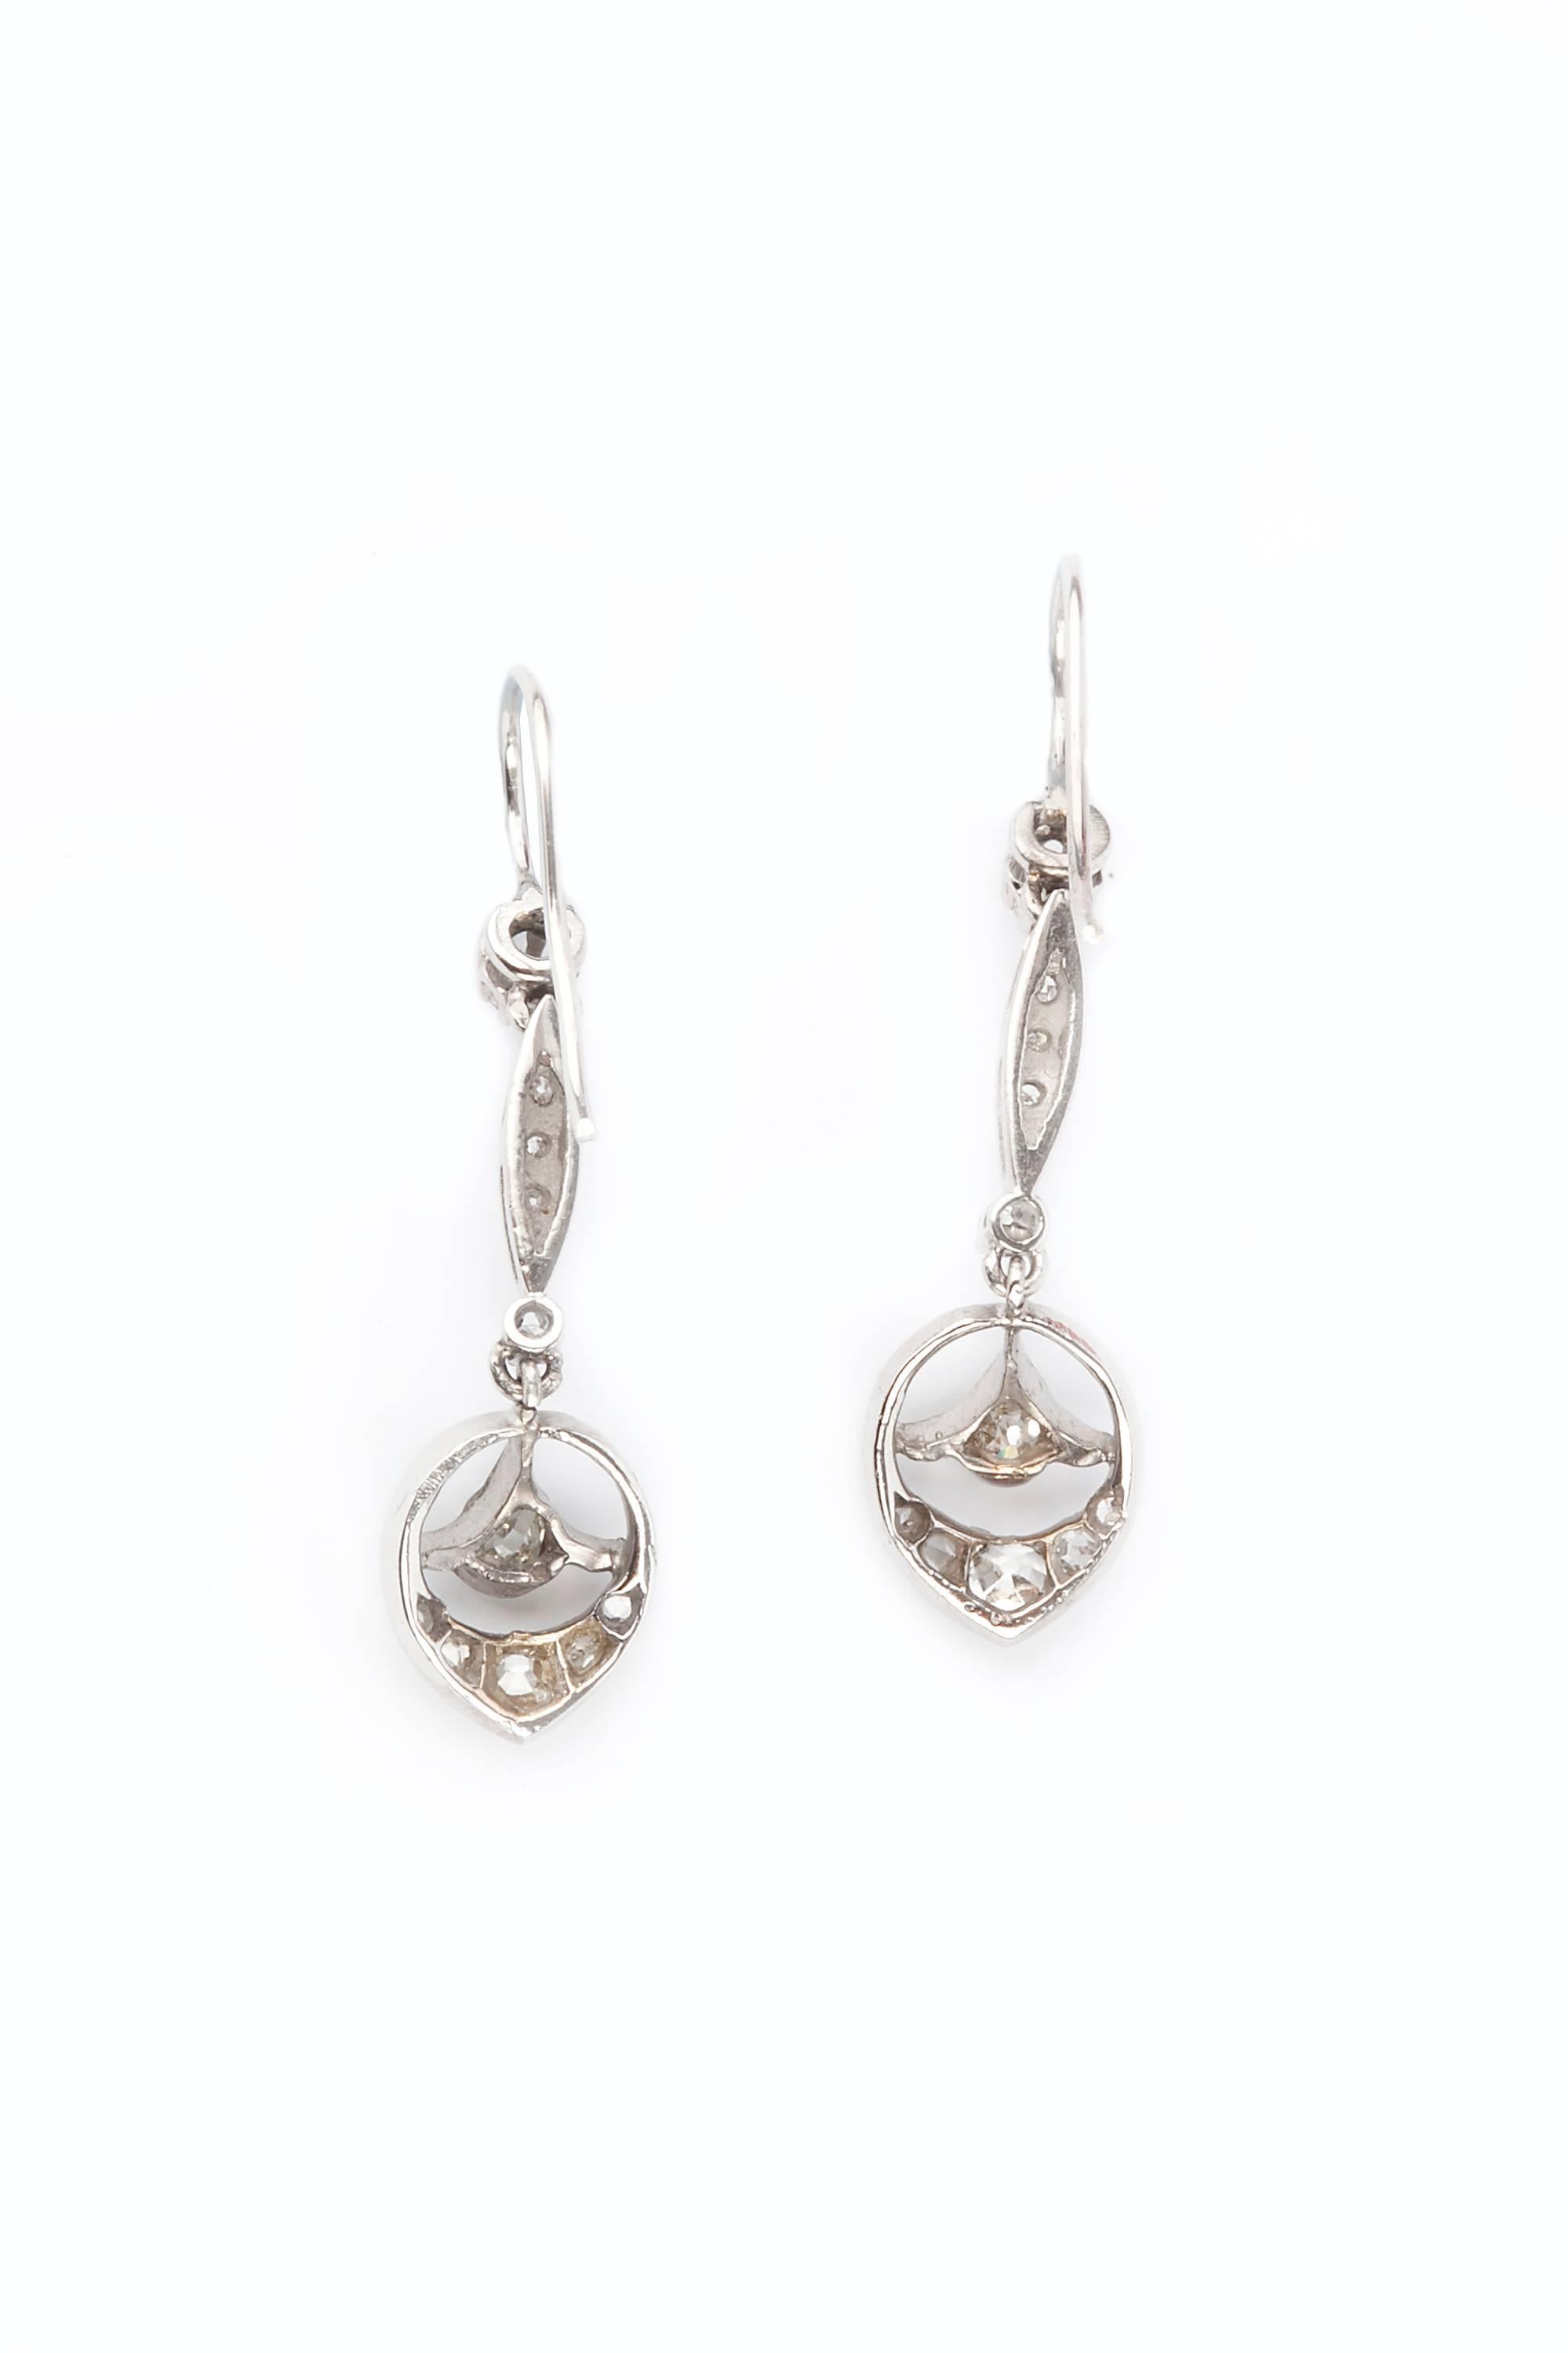 A pair of delicate rose cut diamond set Edwardian earrings, very elegant and set in a milgrain setting. A very elegant original pair.